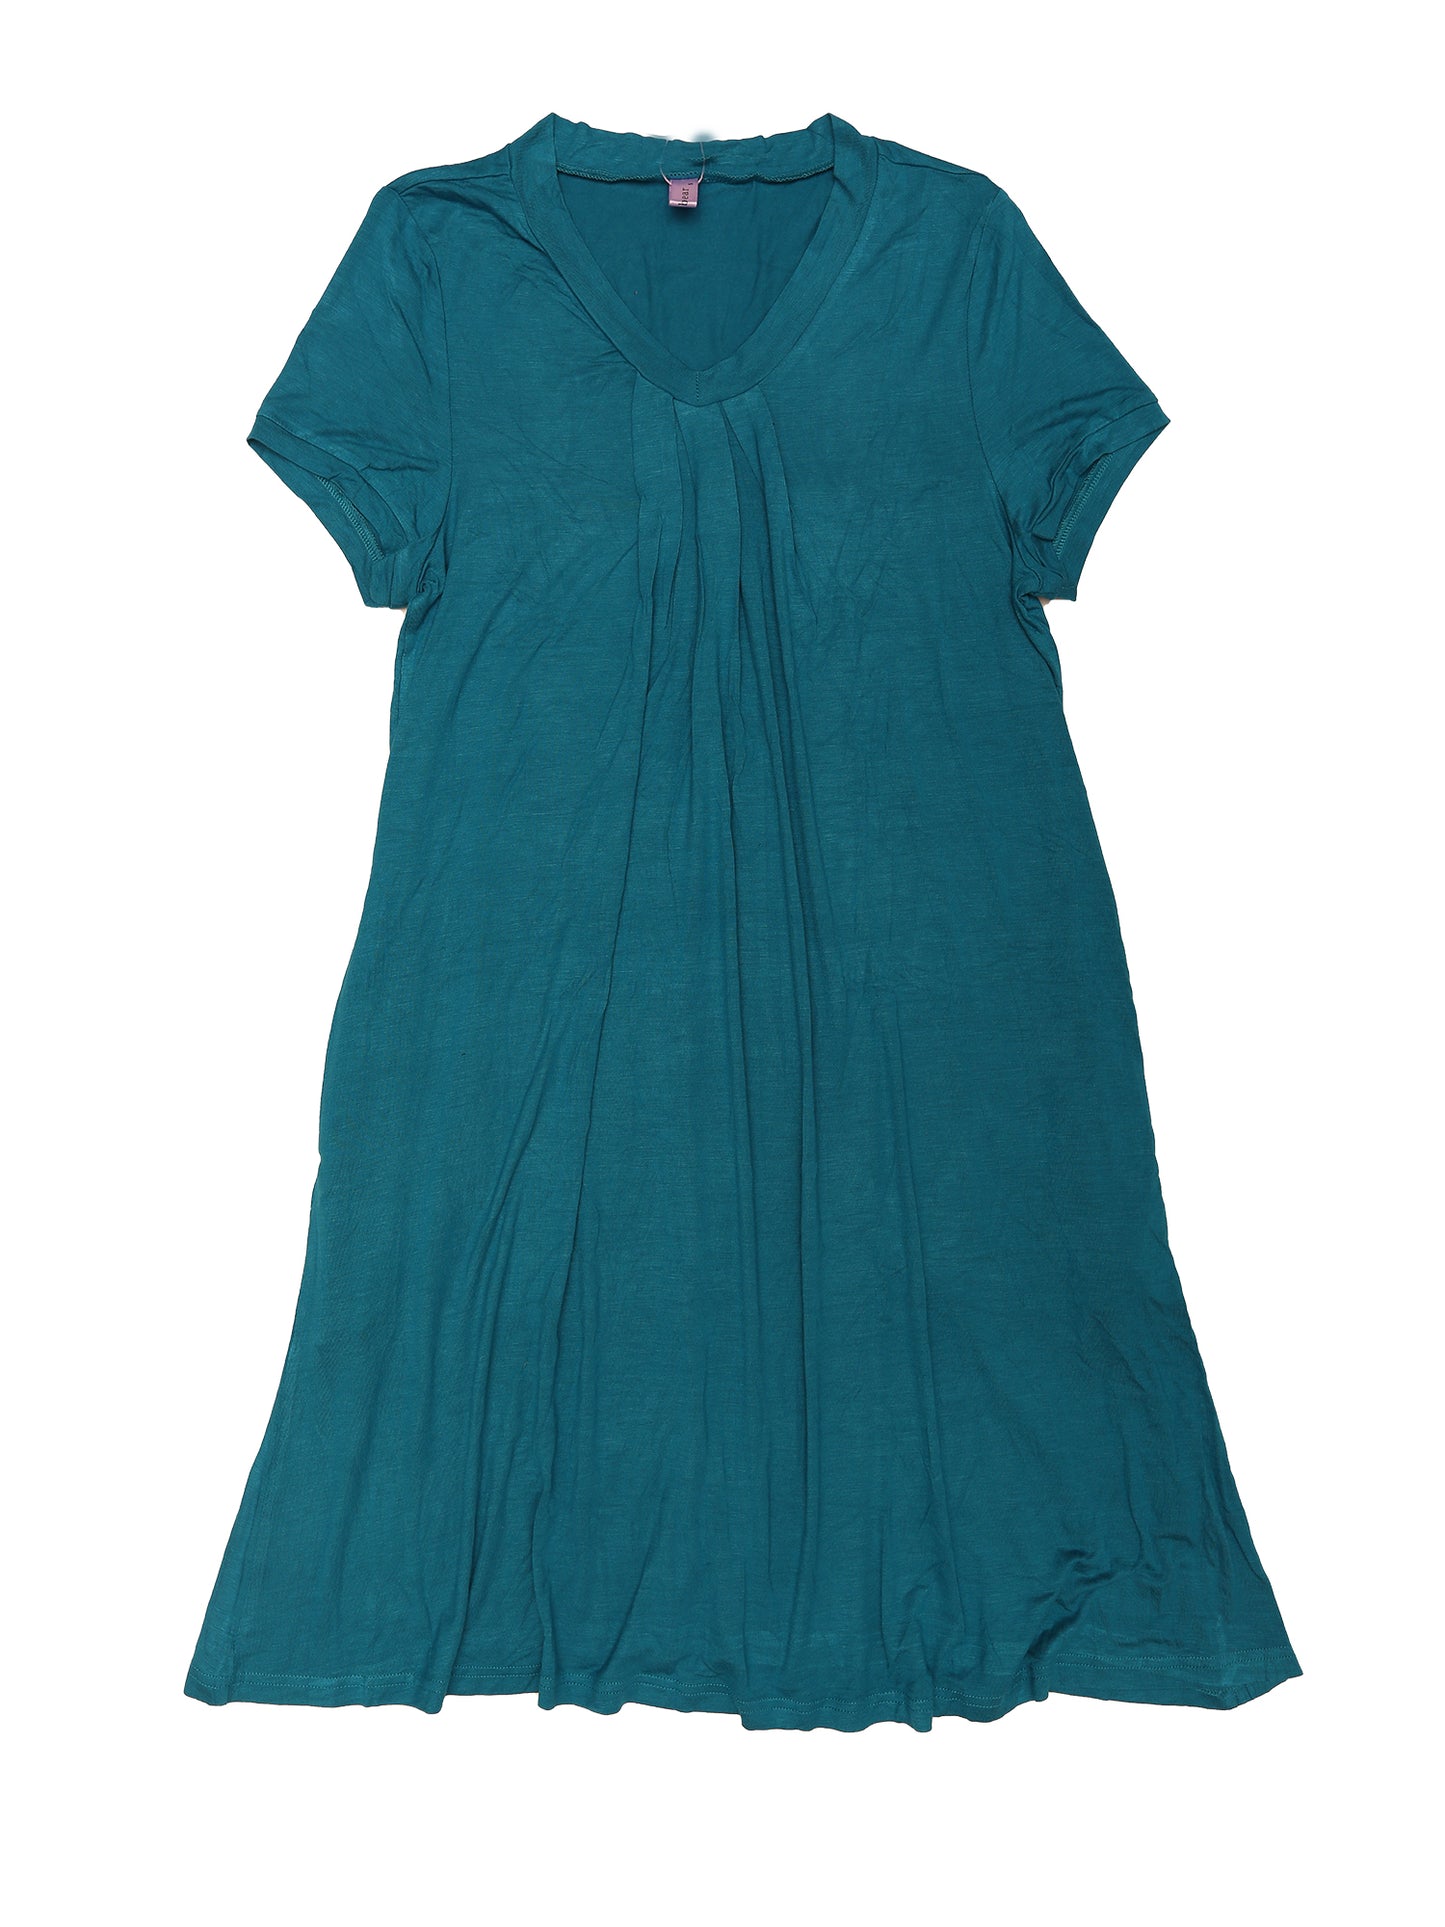 cheibear Pajama Dress Nightshirt Sleepwear V-Neck with Pockets Lounge Nightgown Peacoke Blue